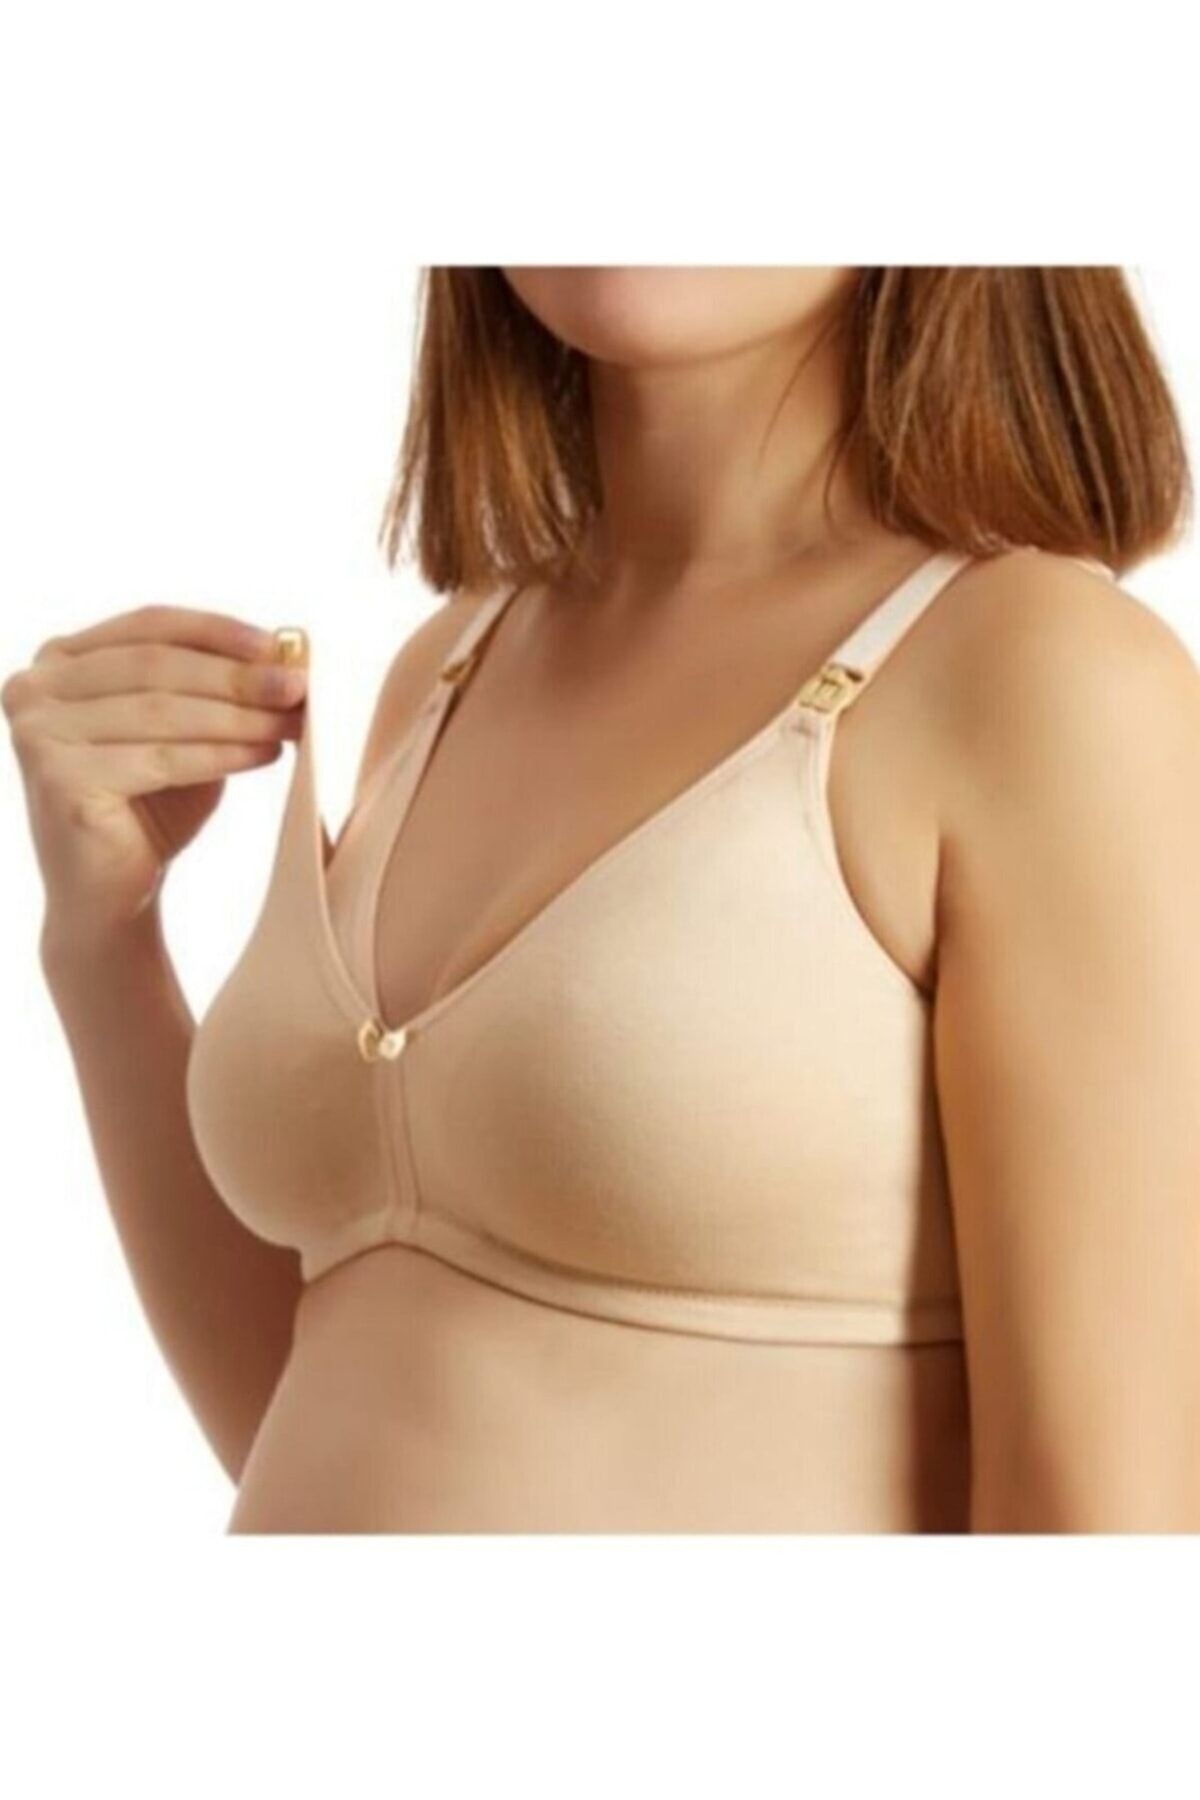 İmer İç Giyim Imer 2236 Modal Fabric Breastfeeding Bra - Trendyol